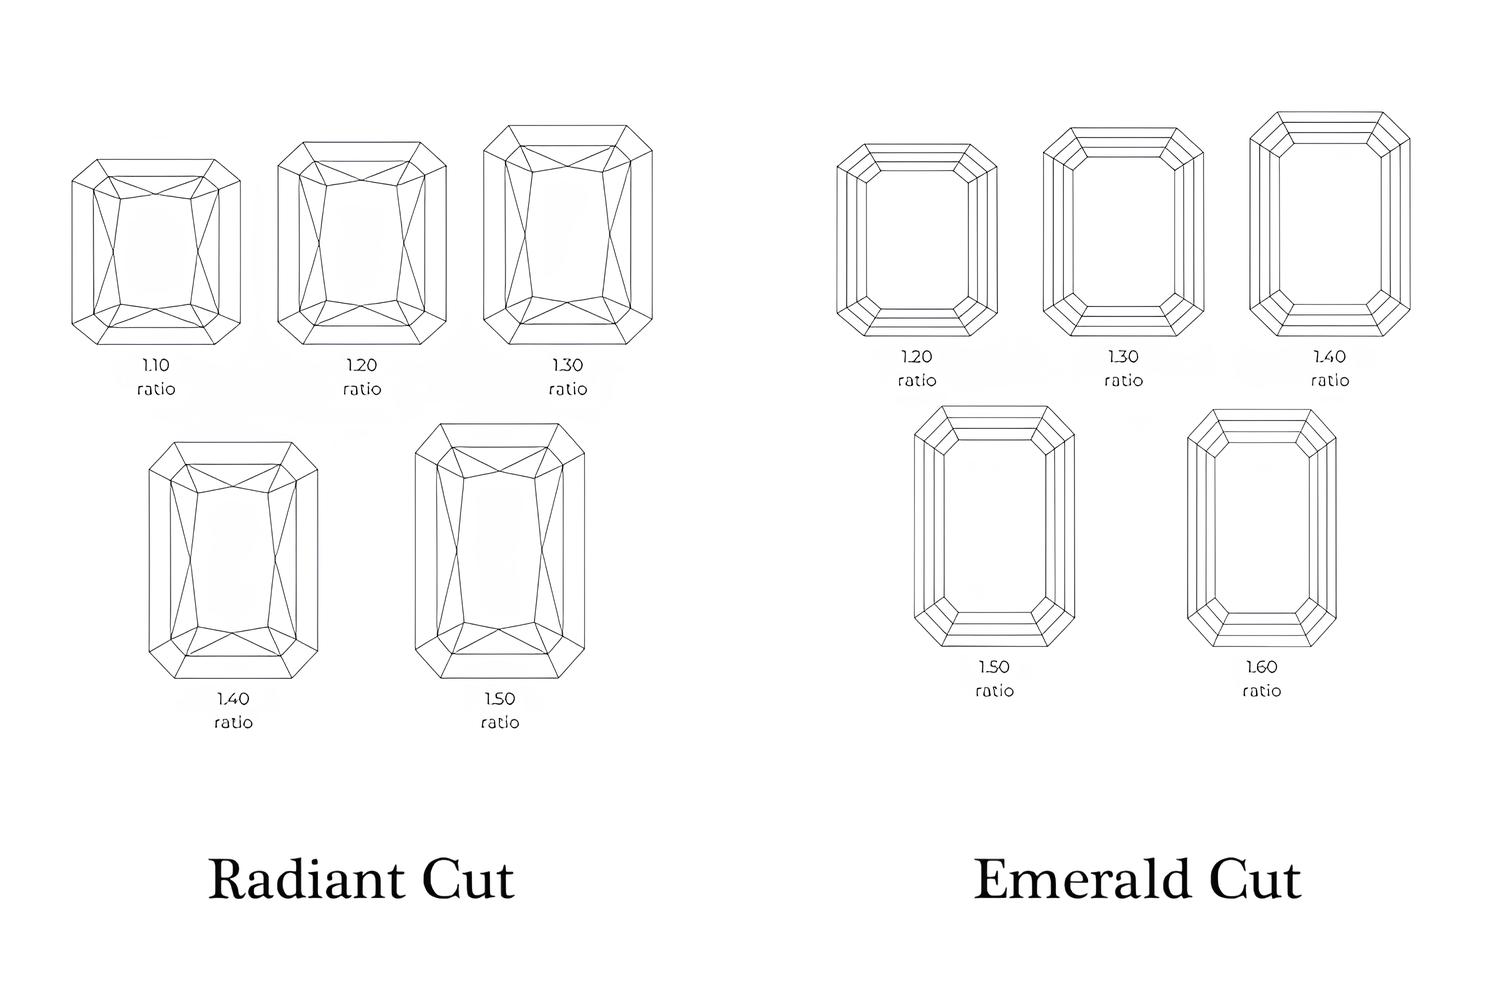 radiant vs emerald cut: light to width ratio